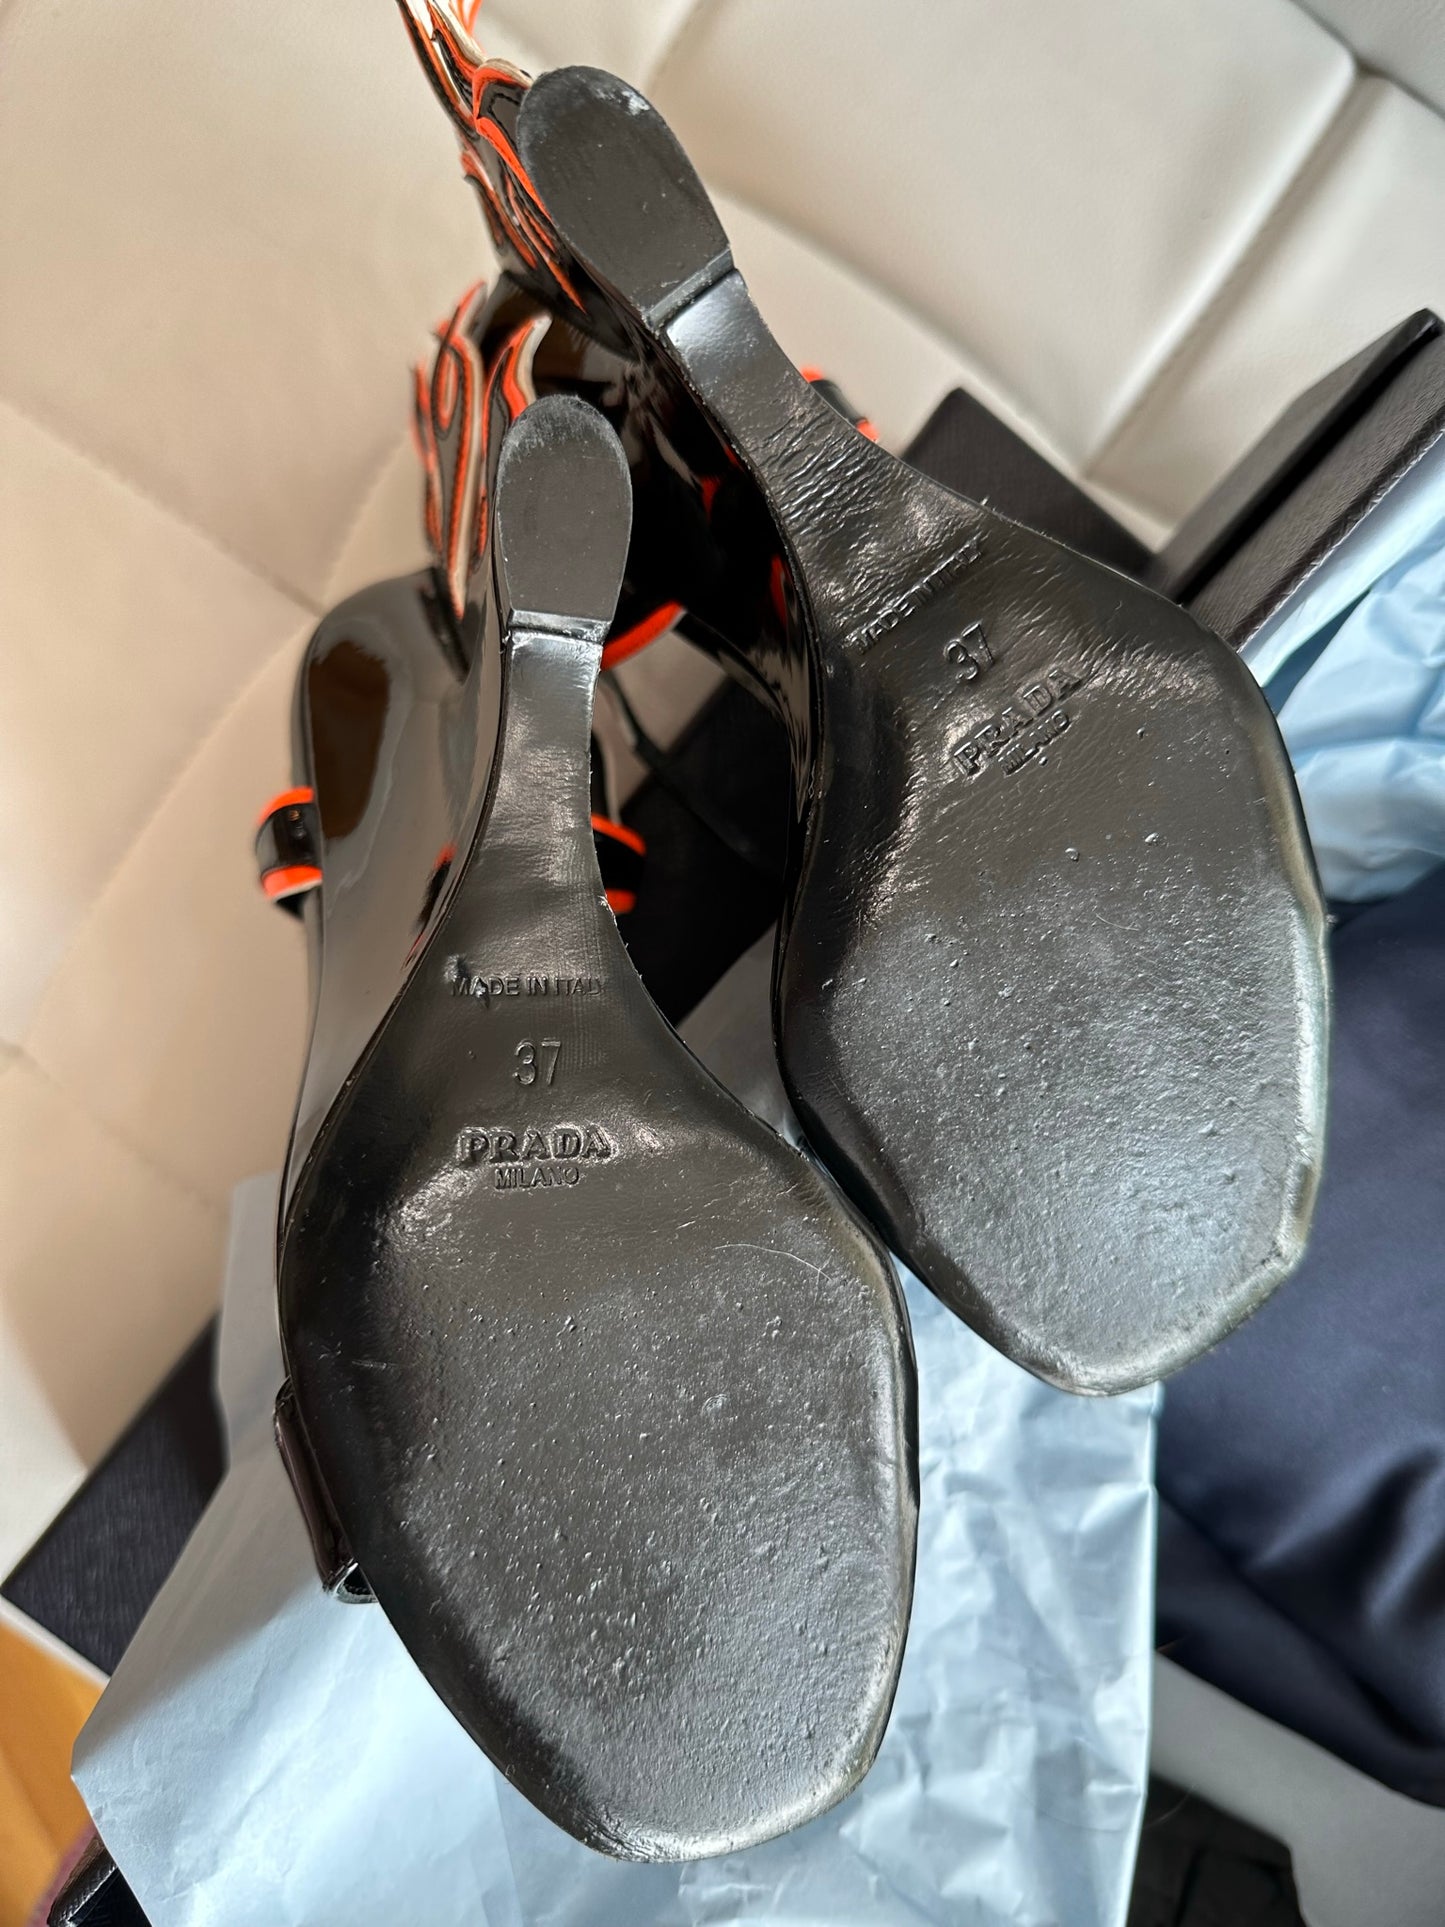 Prada black orange flame heels sandals shoes 37